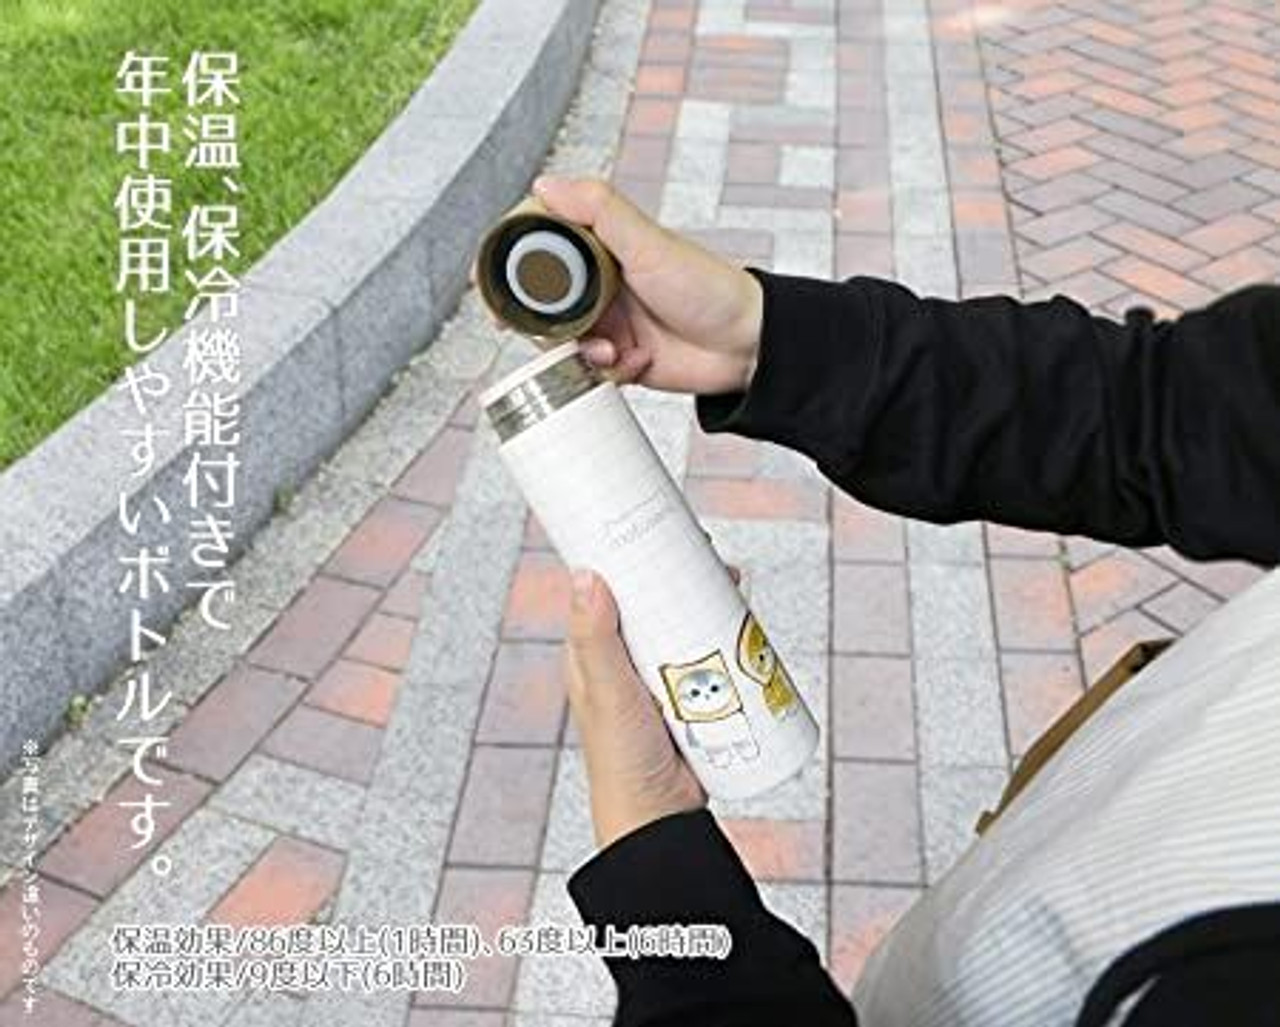 Toa Kinzoku - mofusand Pocket Mini Thermos Bottle 150ml (Pancake Nyan)